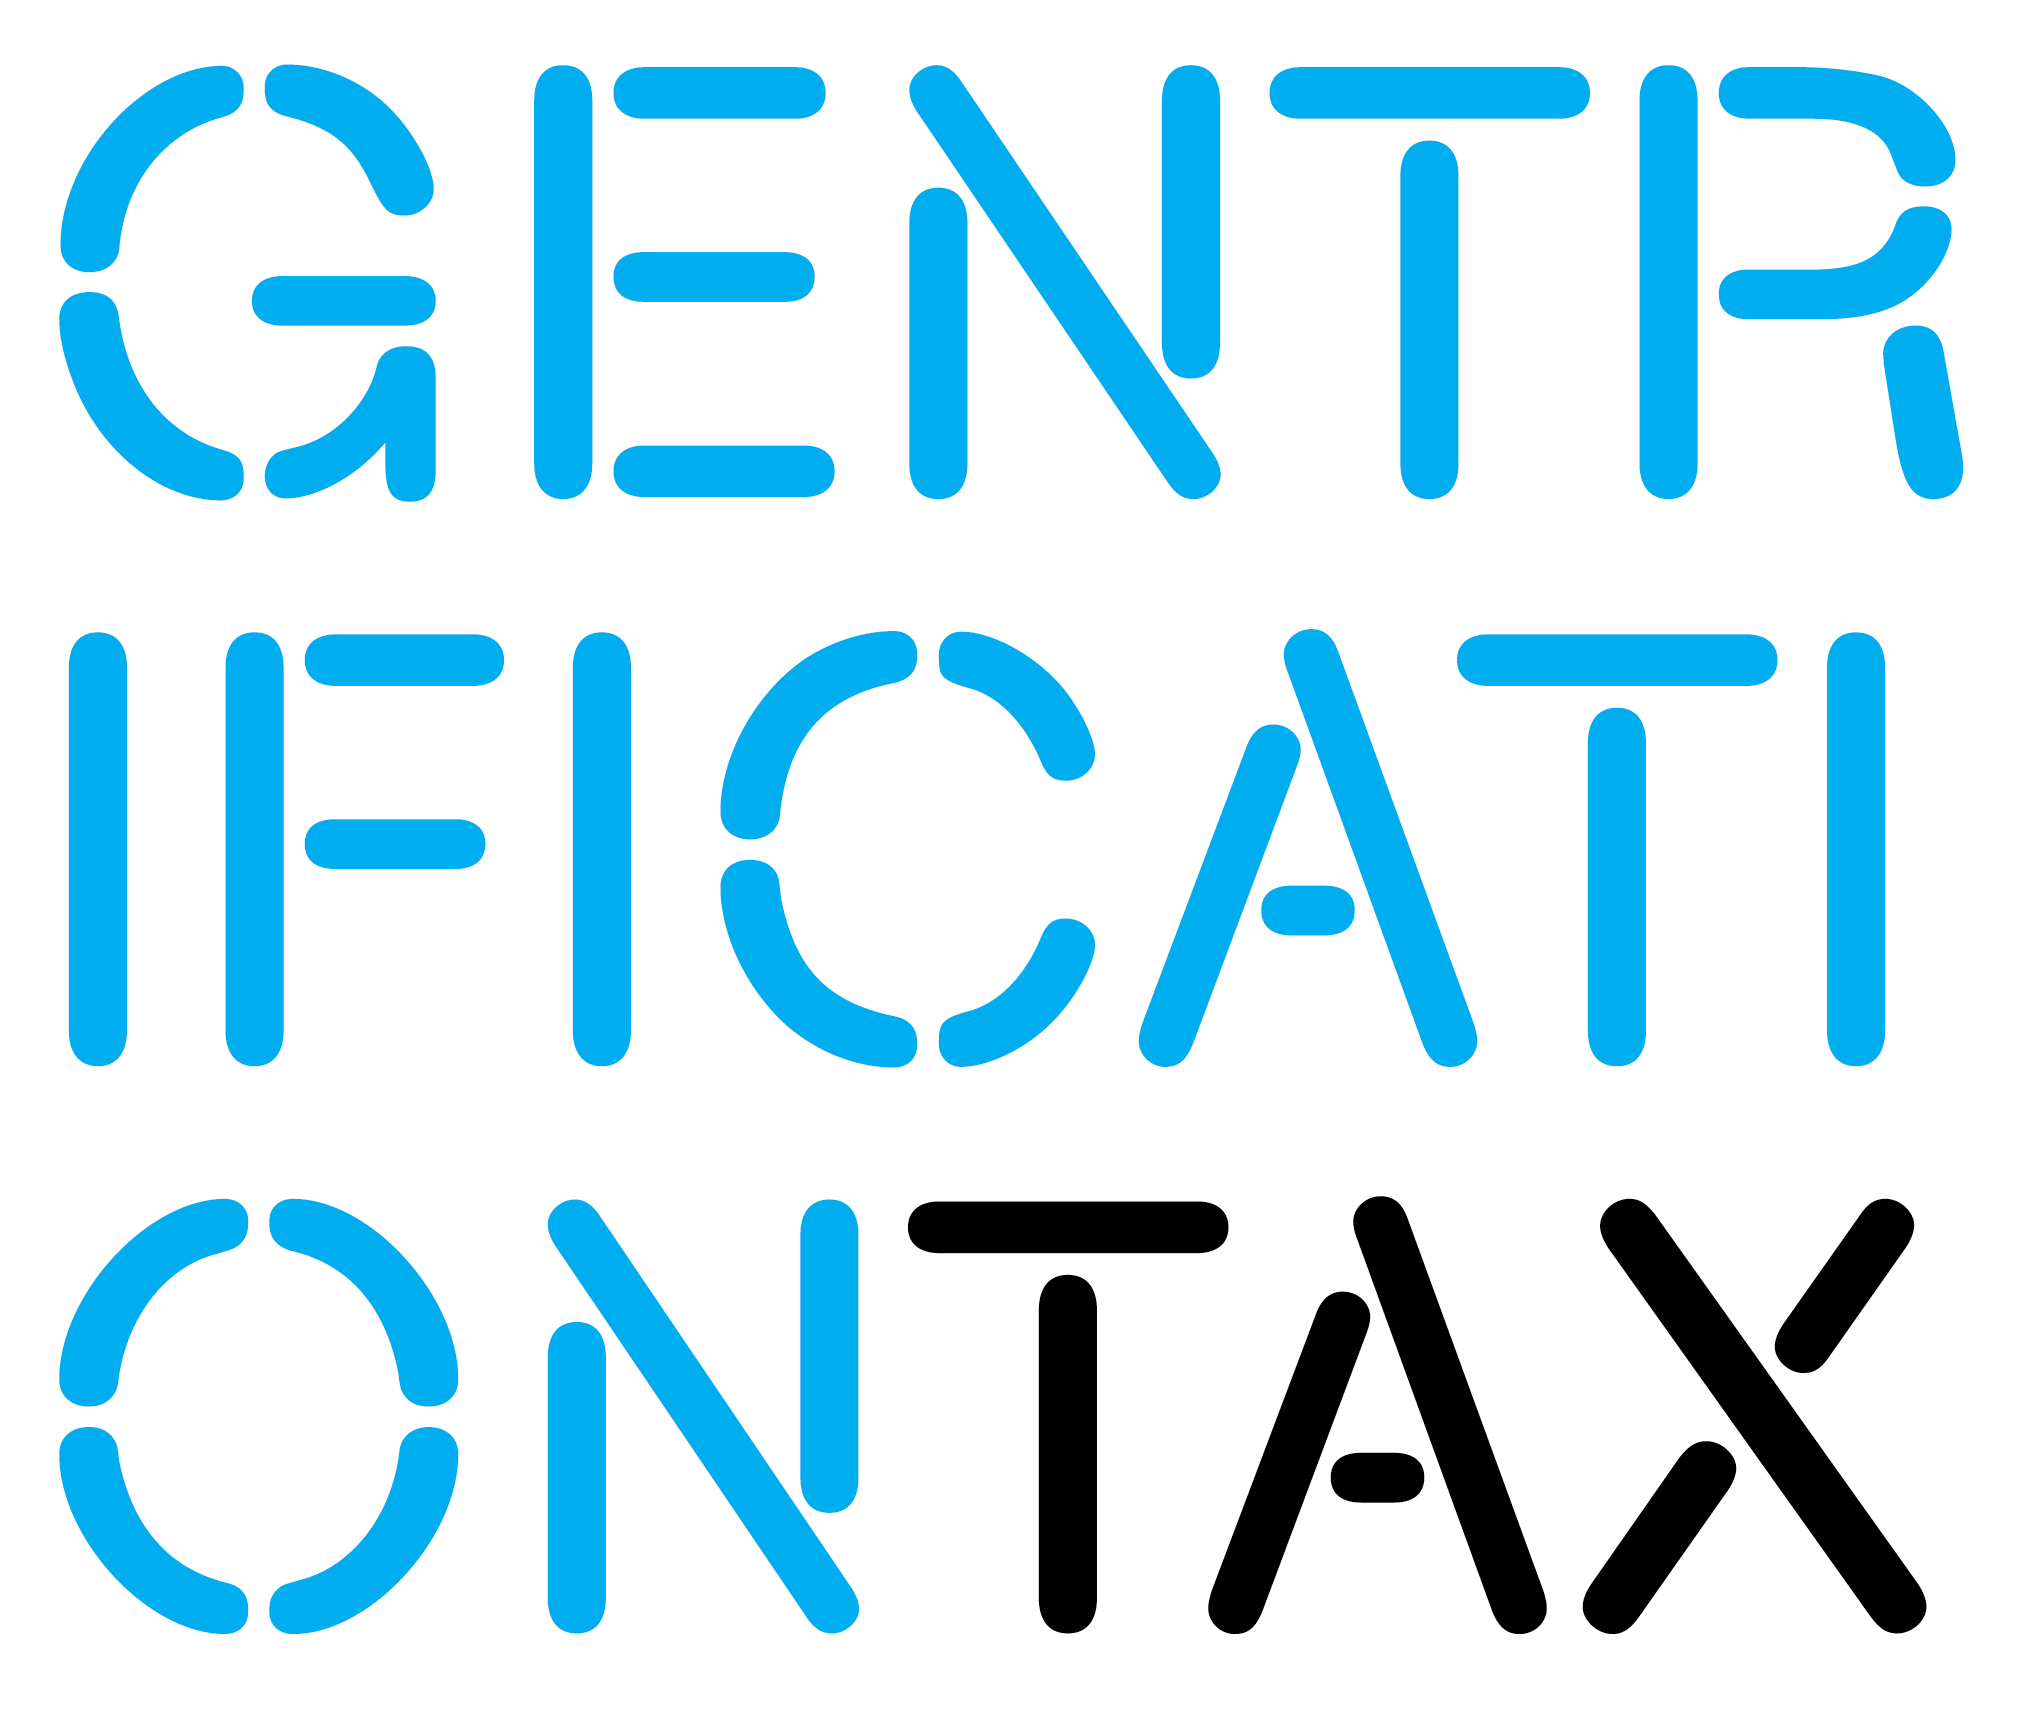 gentrification tax